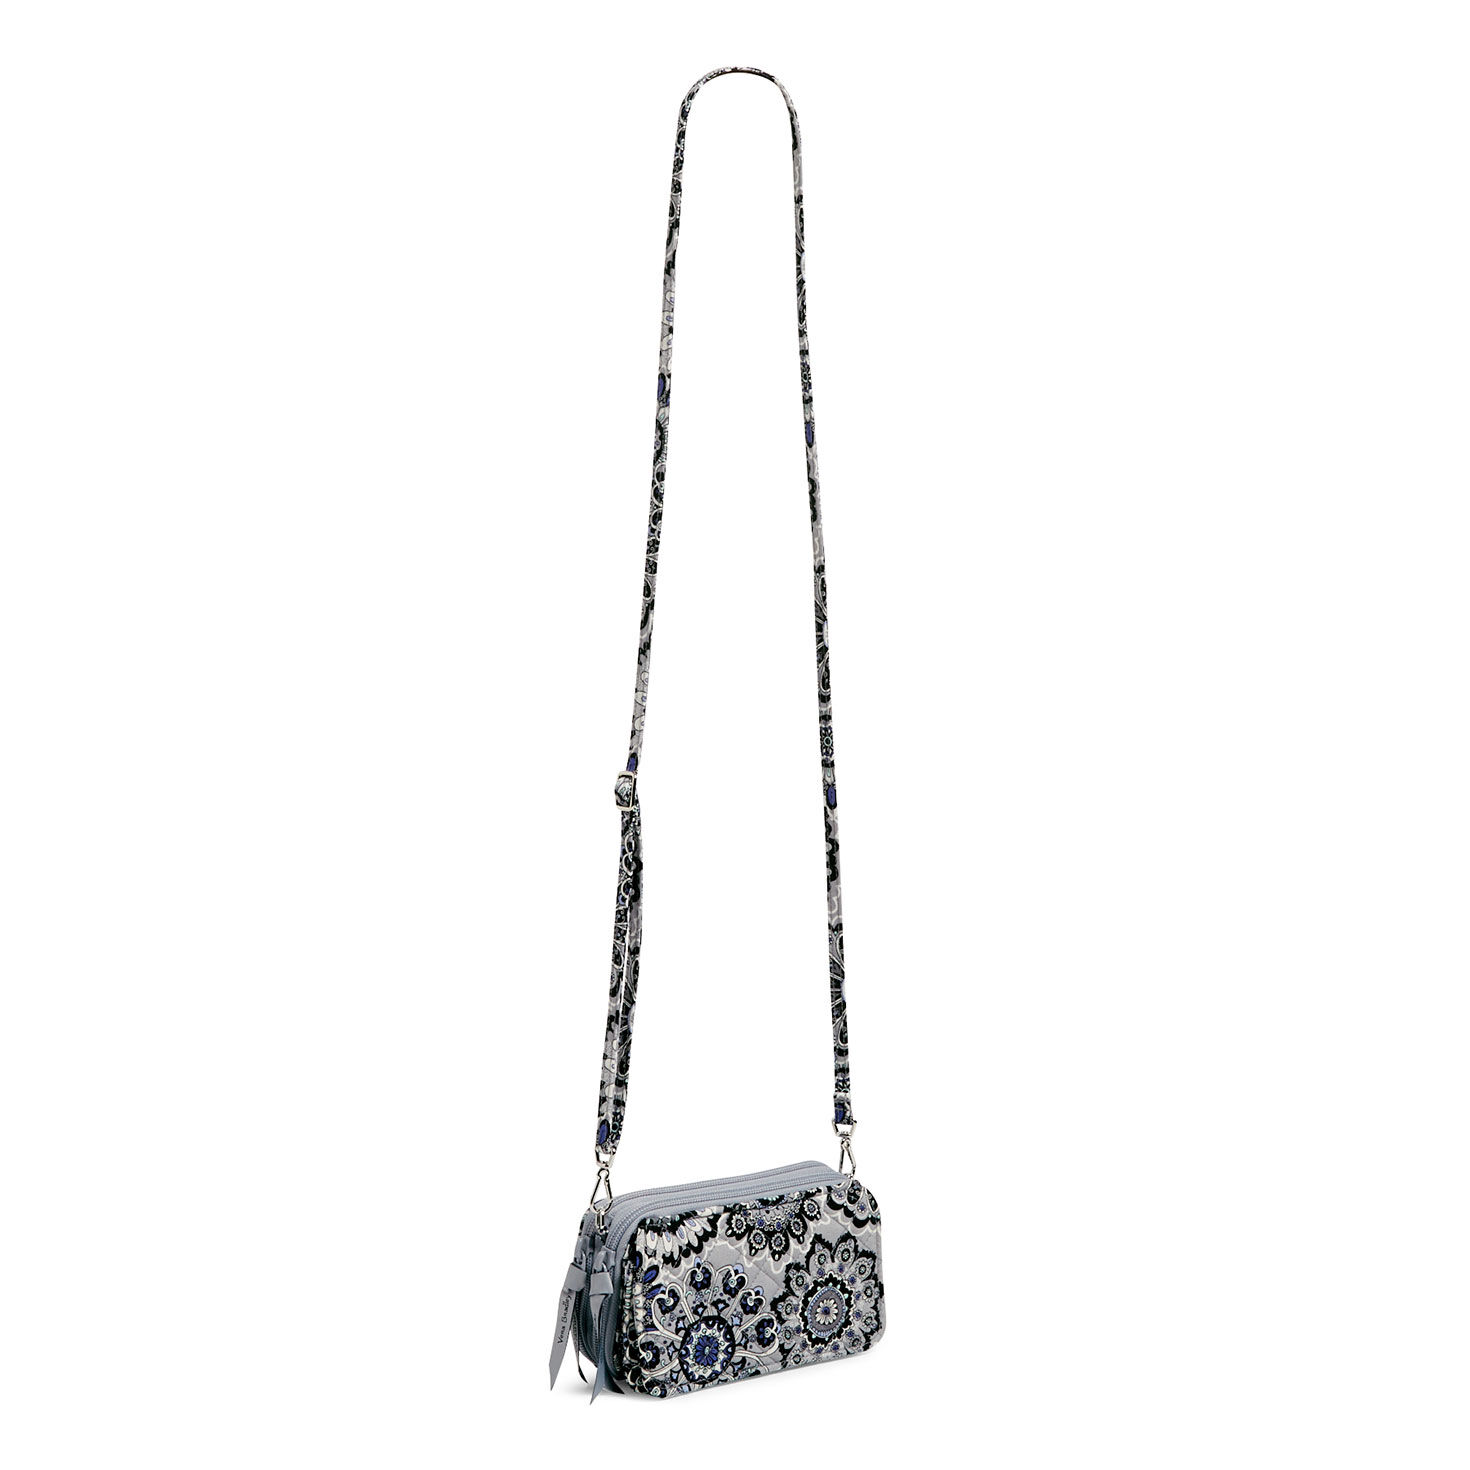 Vera Bradley Shoulder Handbag Brown Quilted Purse | Shoulder handbags, Quilted  purses, Brown leather purses